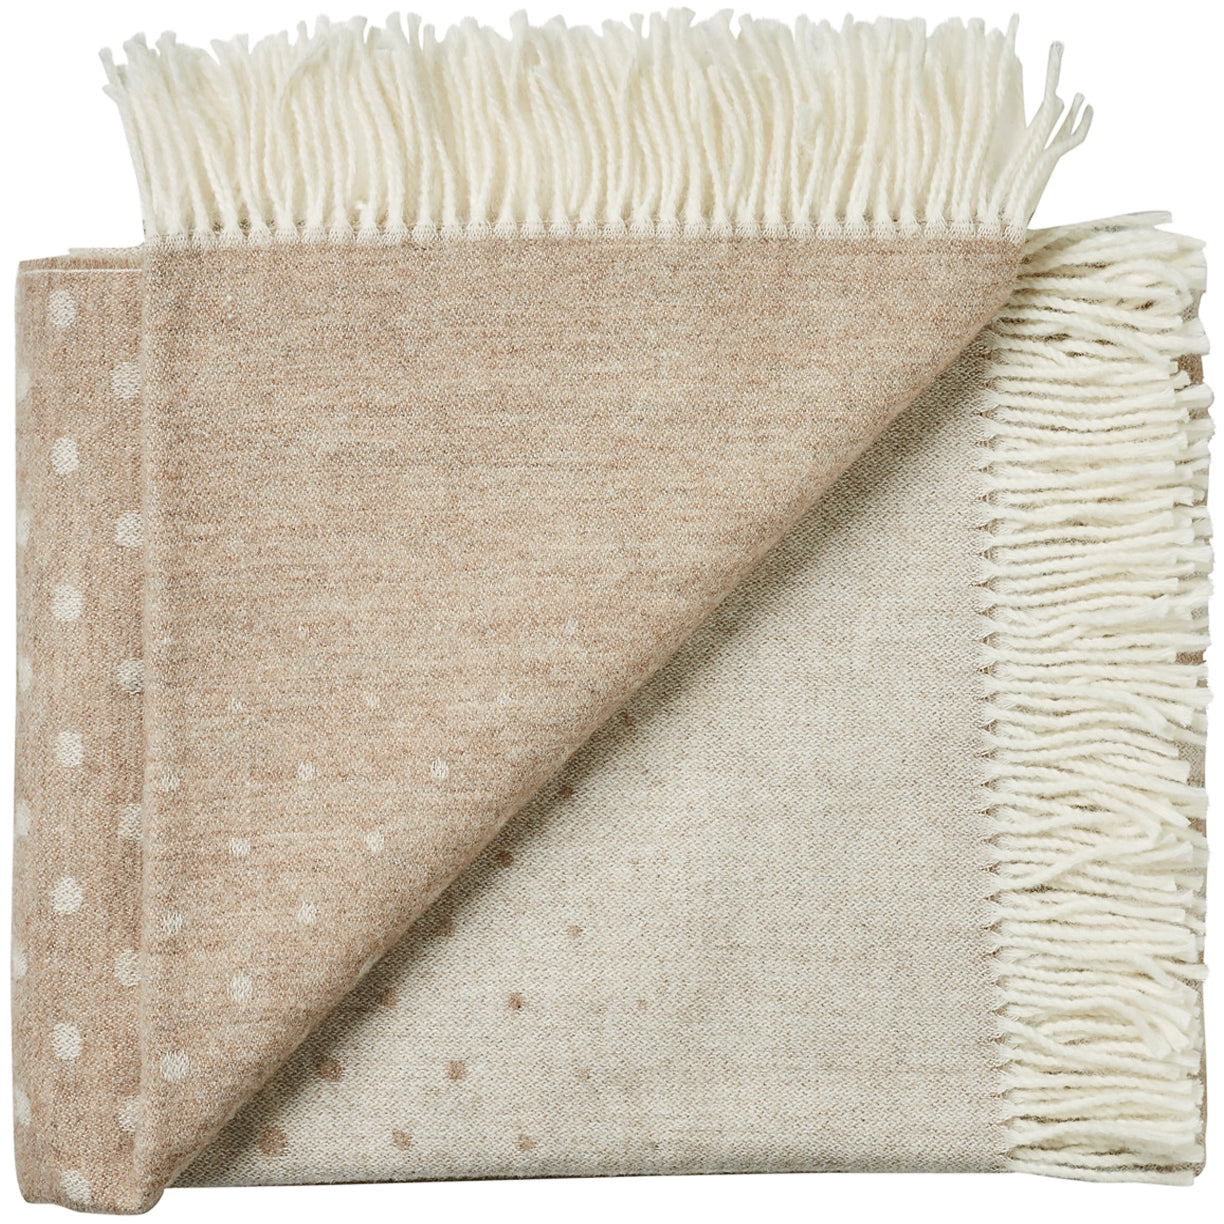 Soft Alpaca Wool Modern Throw Blanket Beige White and Tan Dots